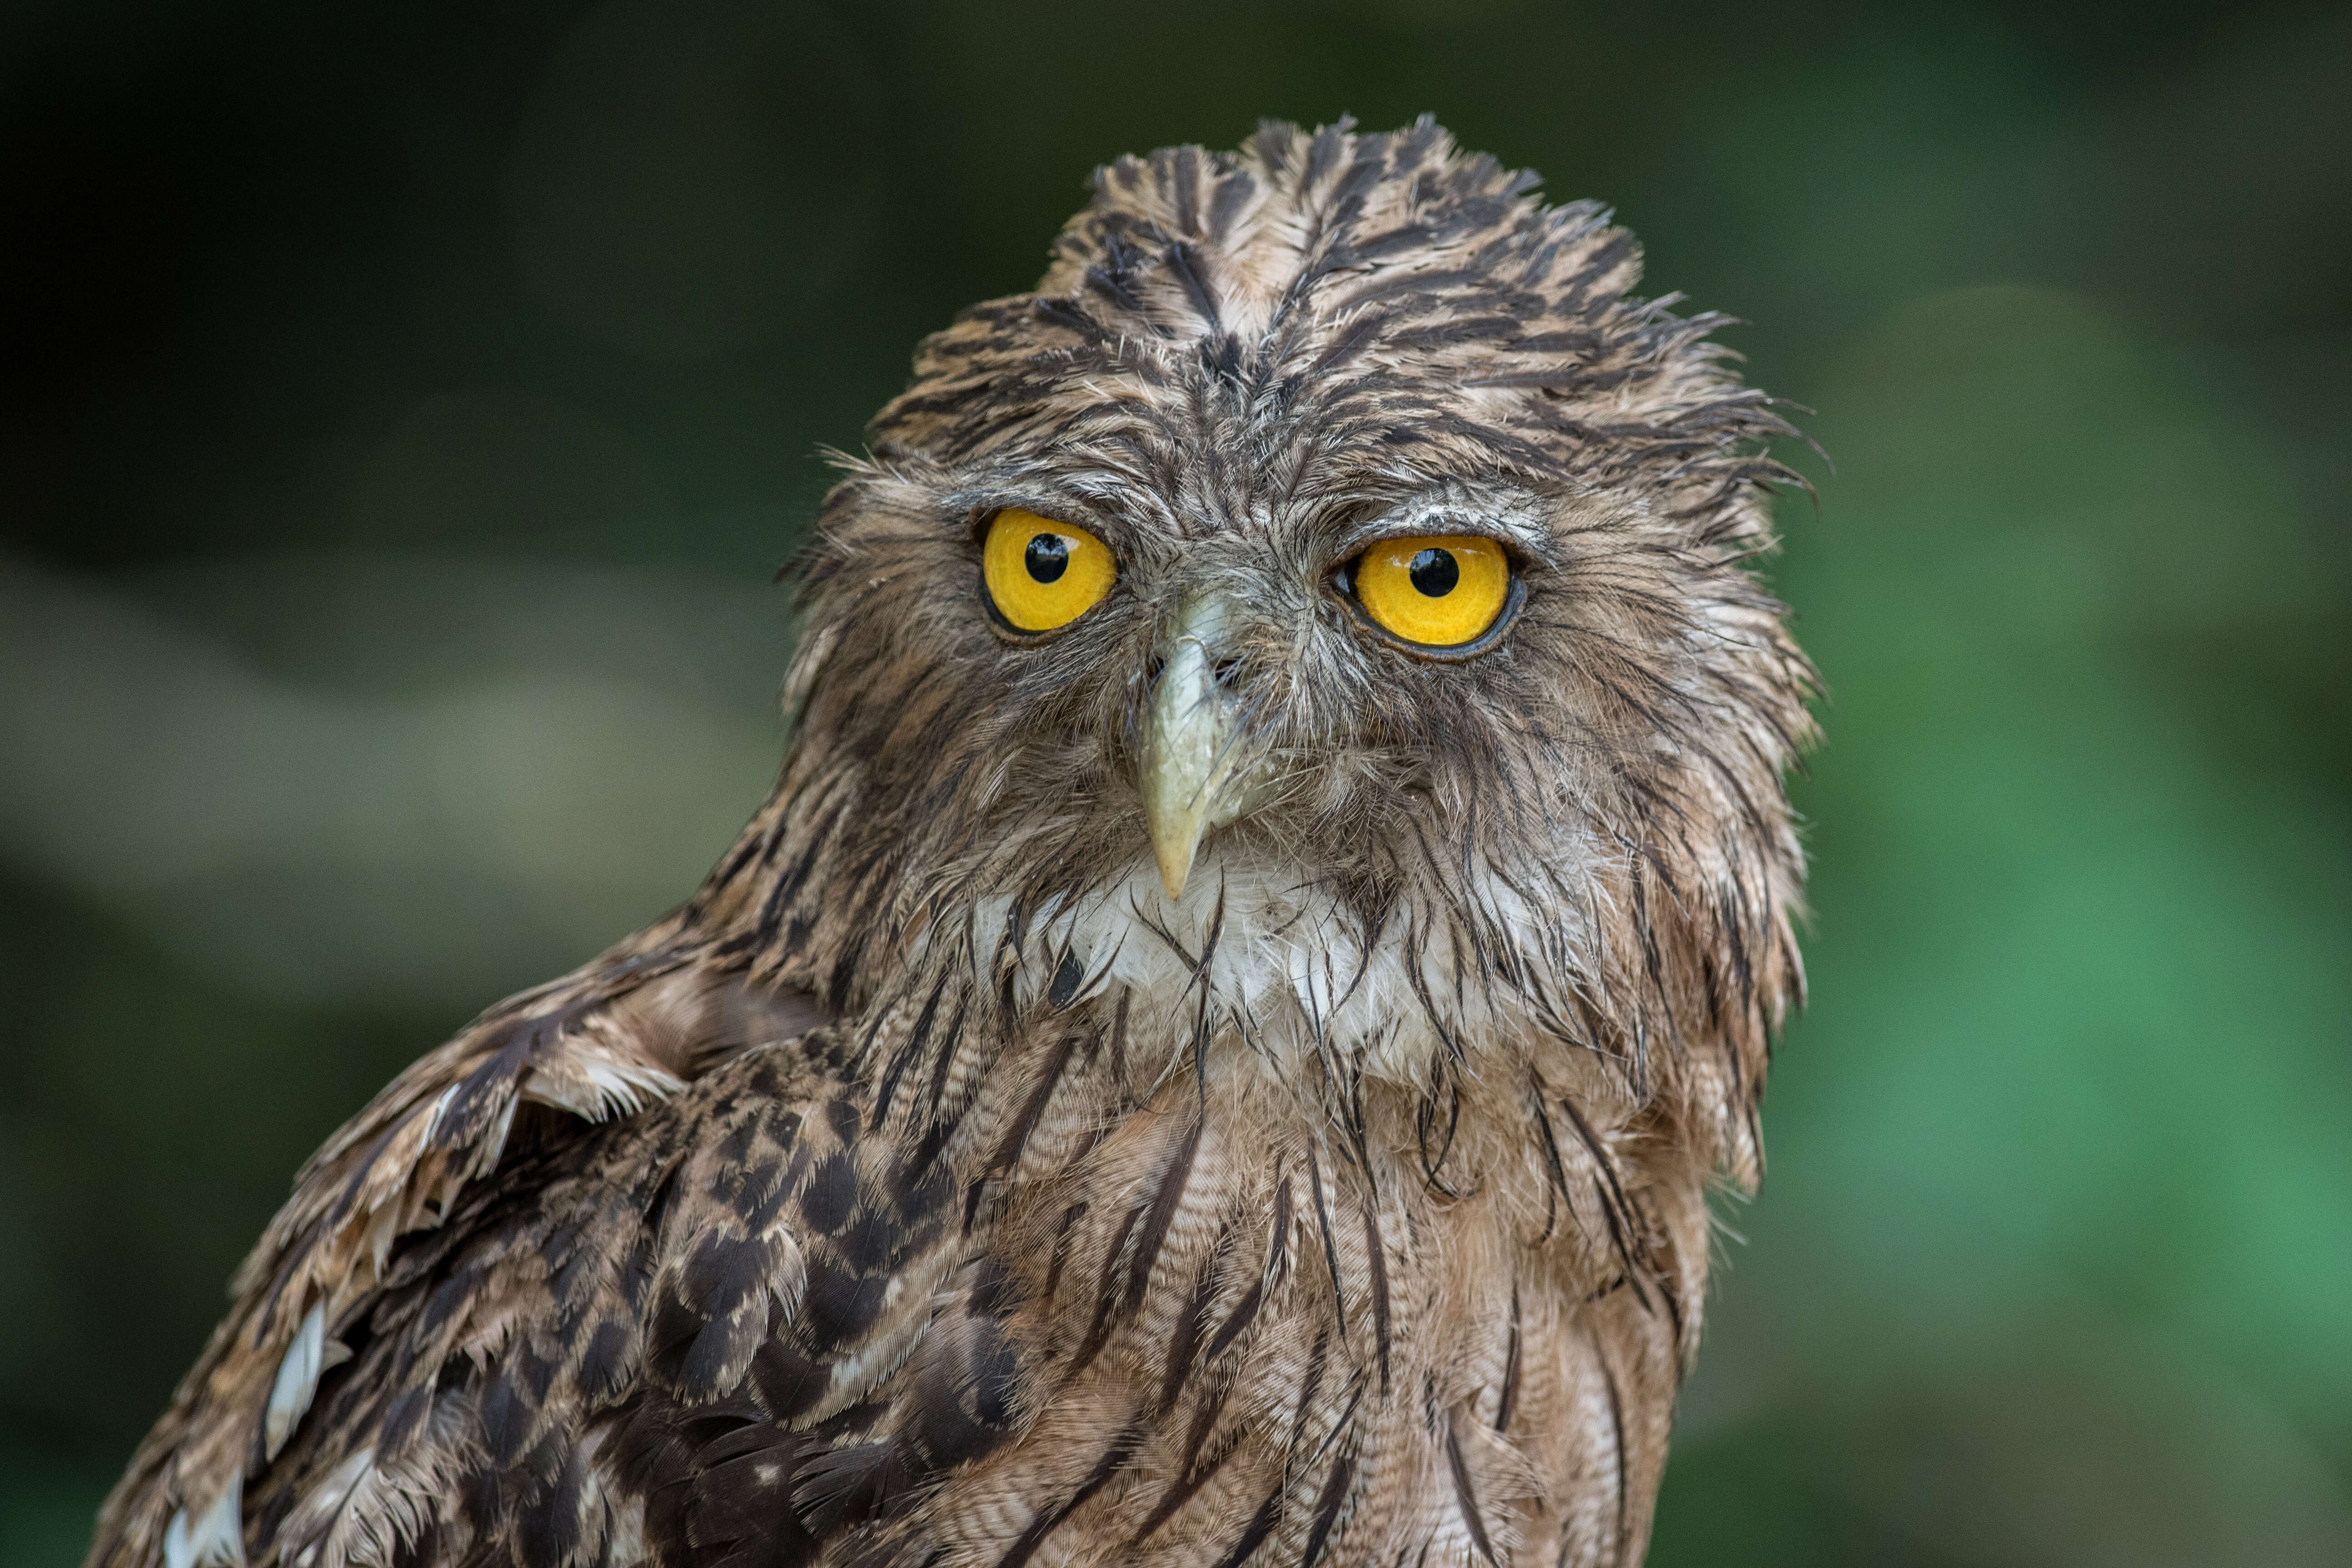 Image of Brown Fish Owl